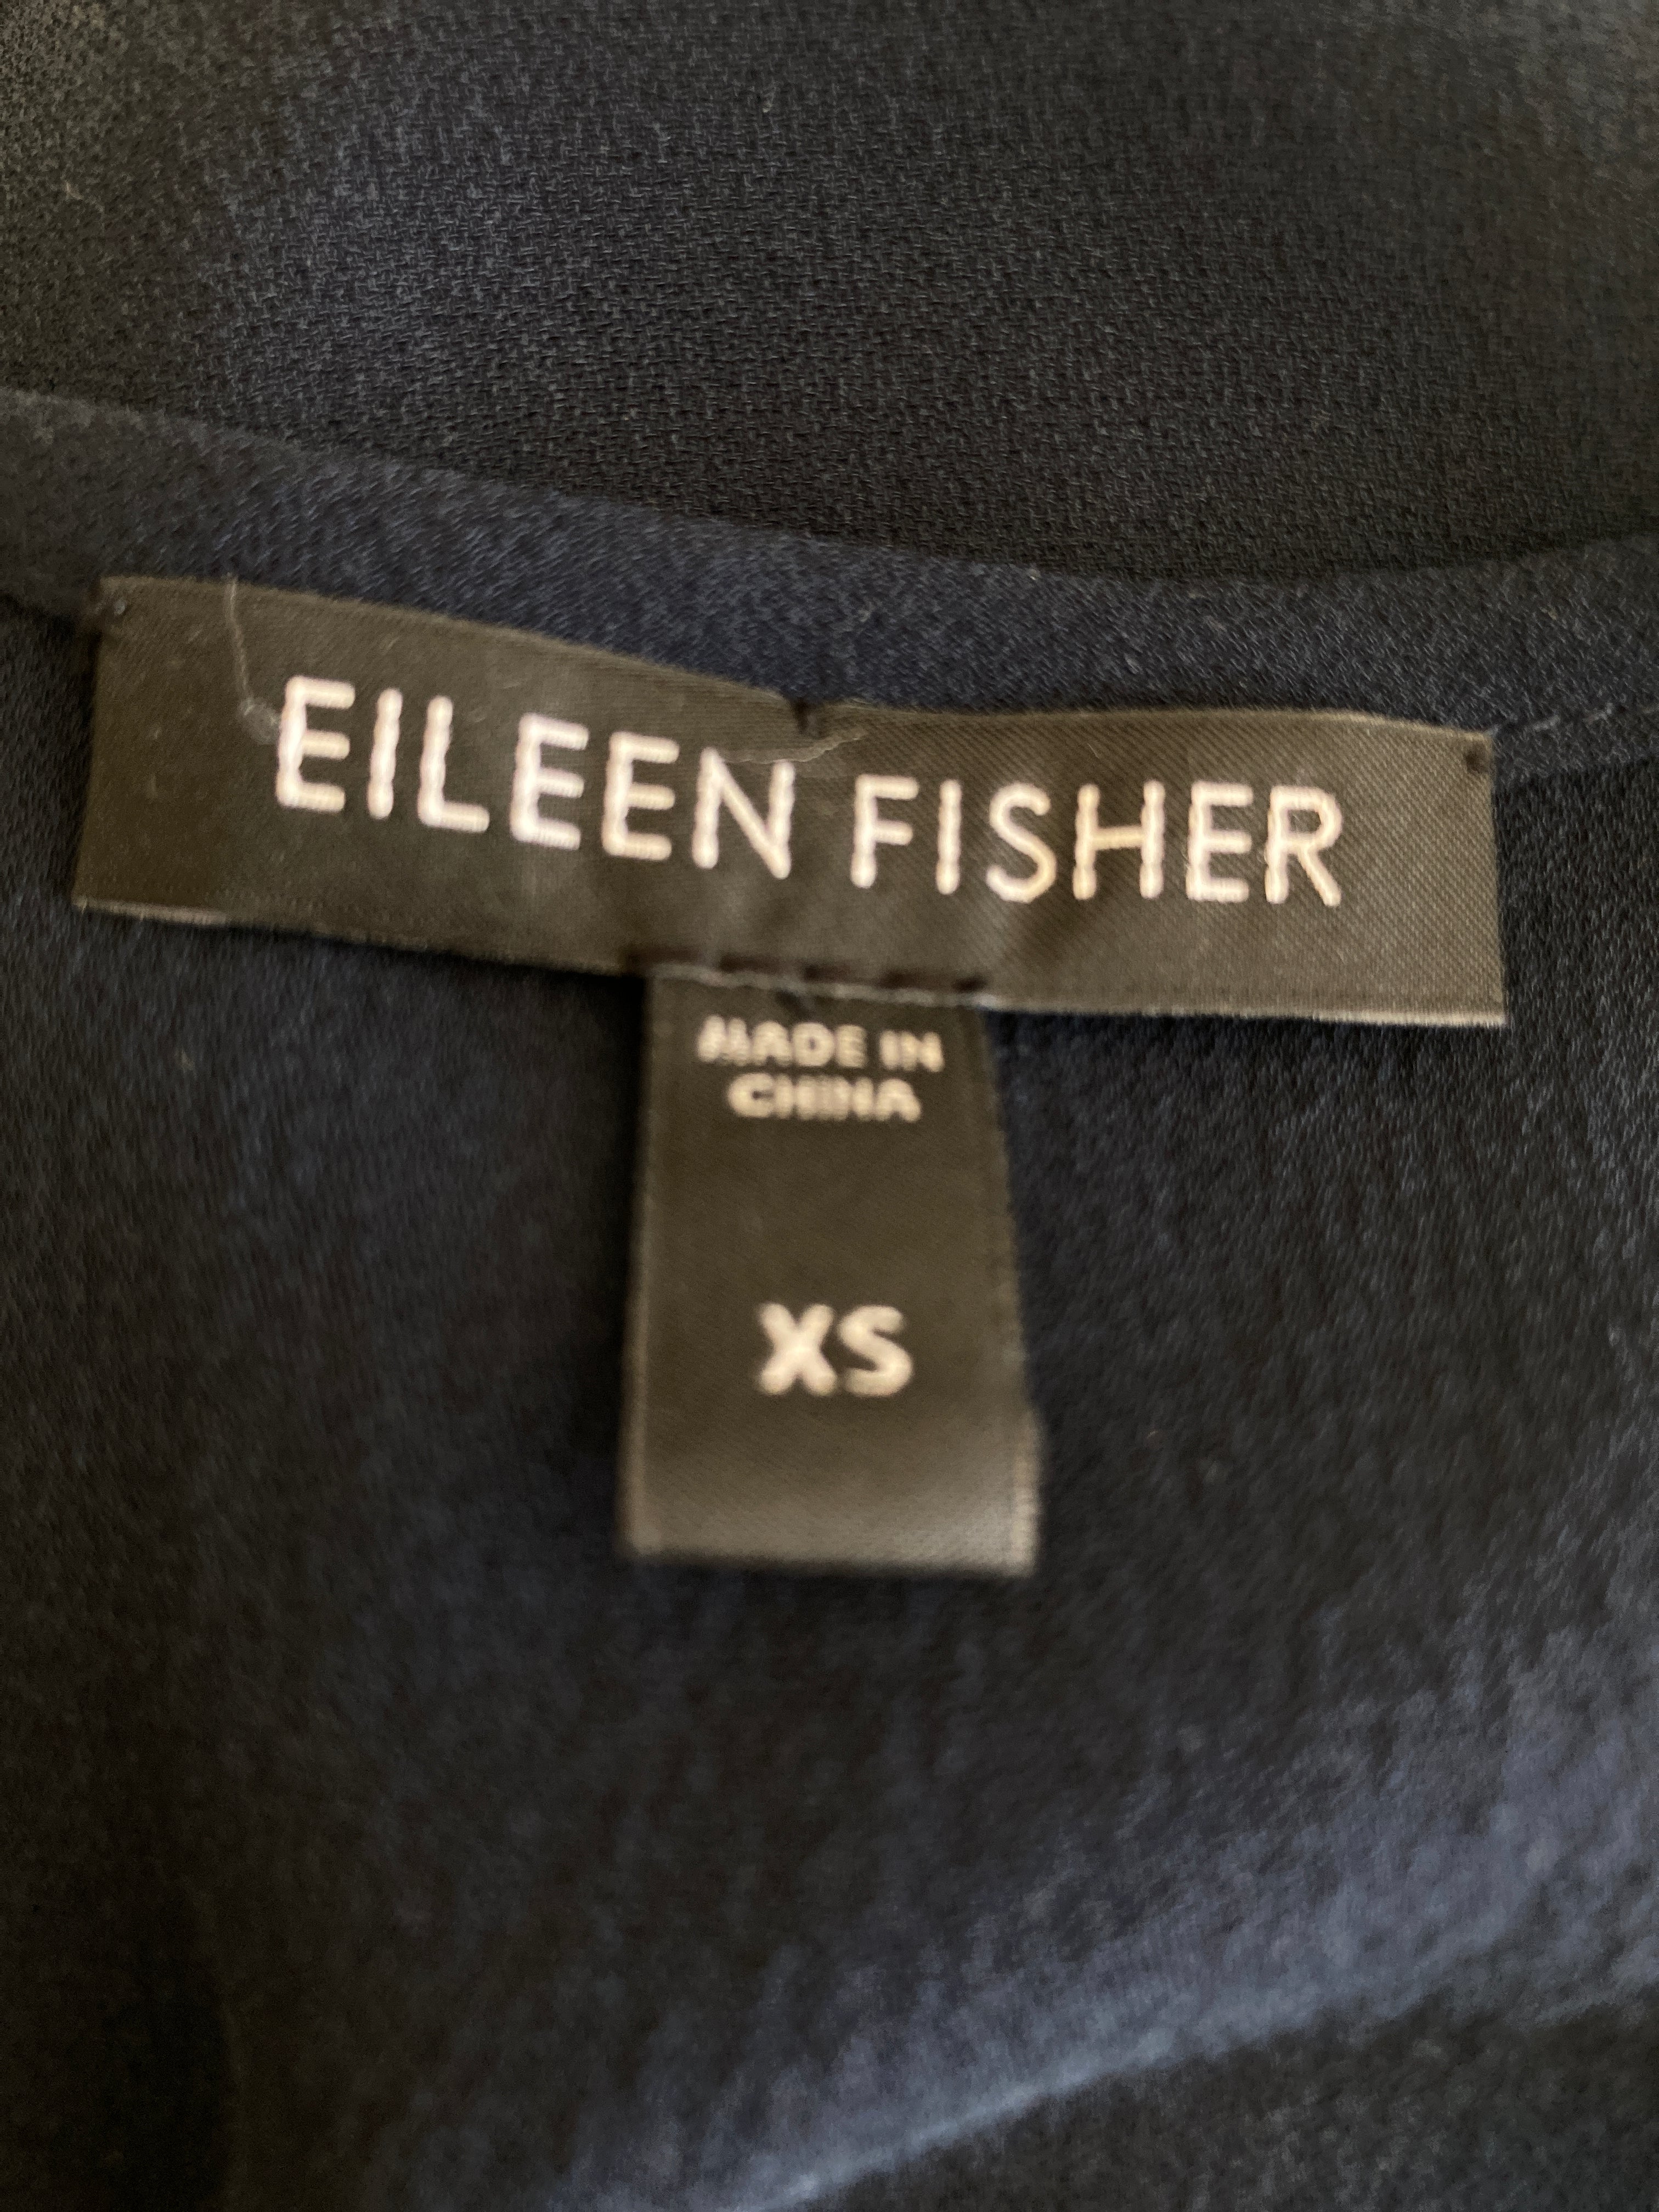 Eileen Fisher Top, XS